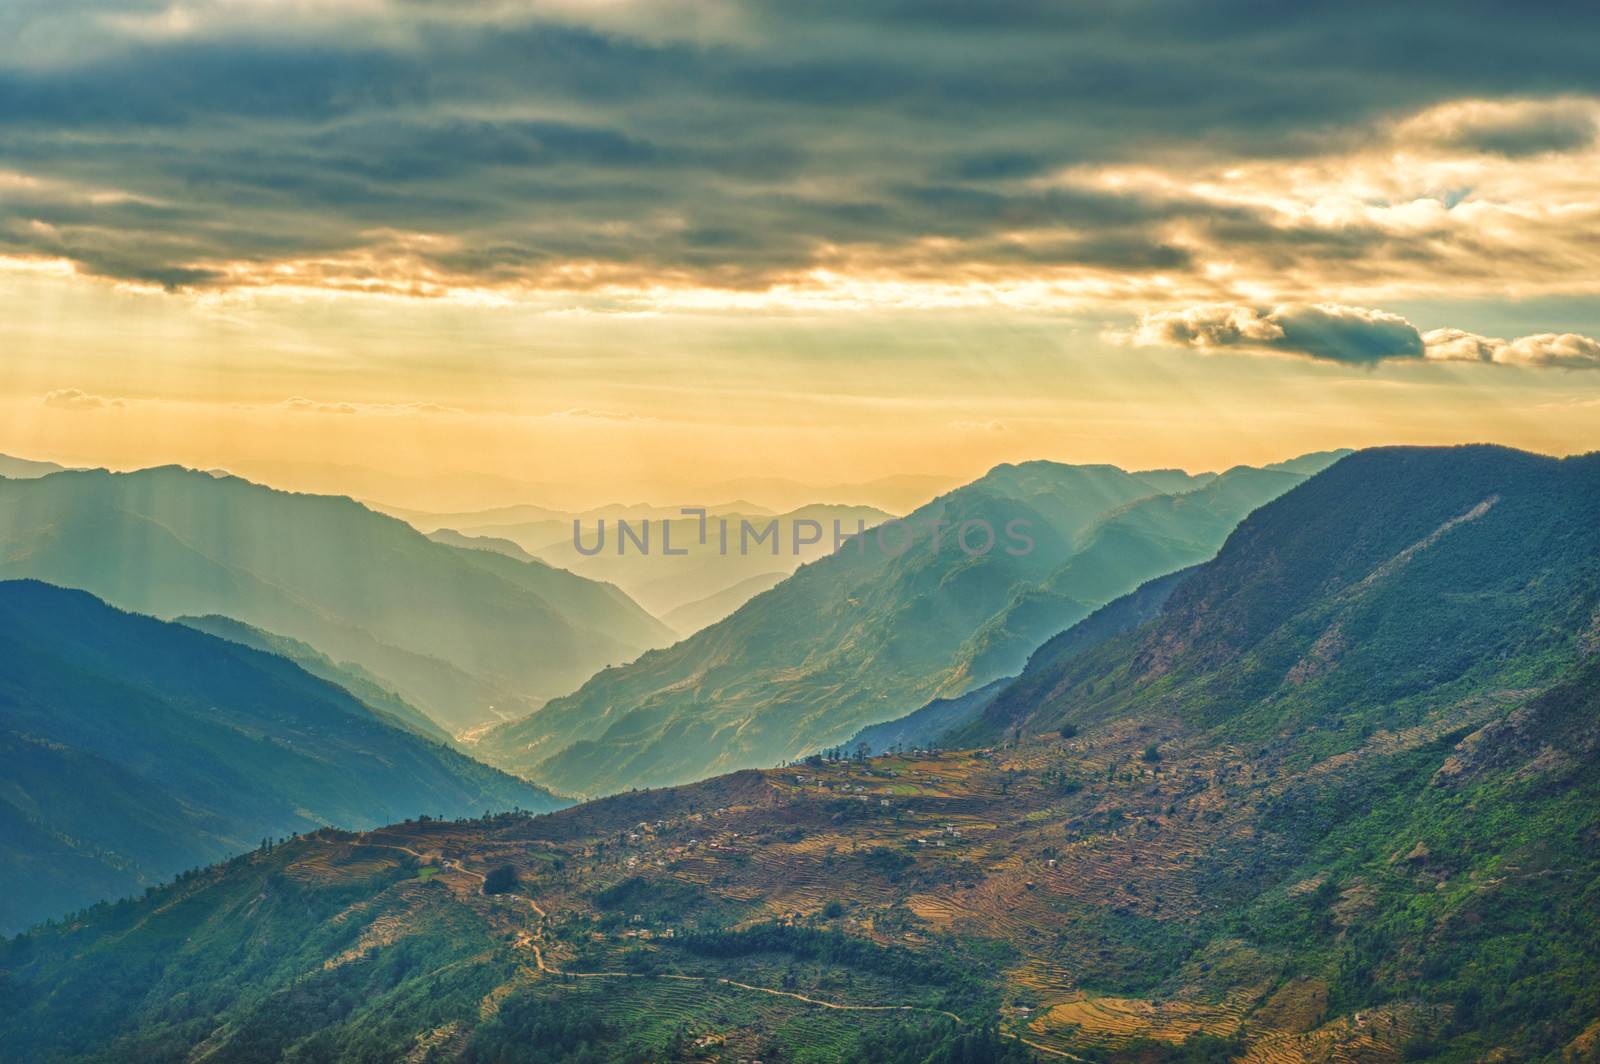 View from kalinchok Photeng towards the Kathmandu valley by 3523Studio